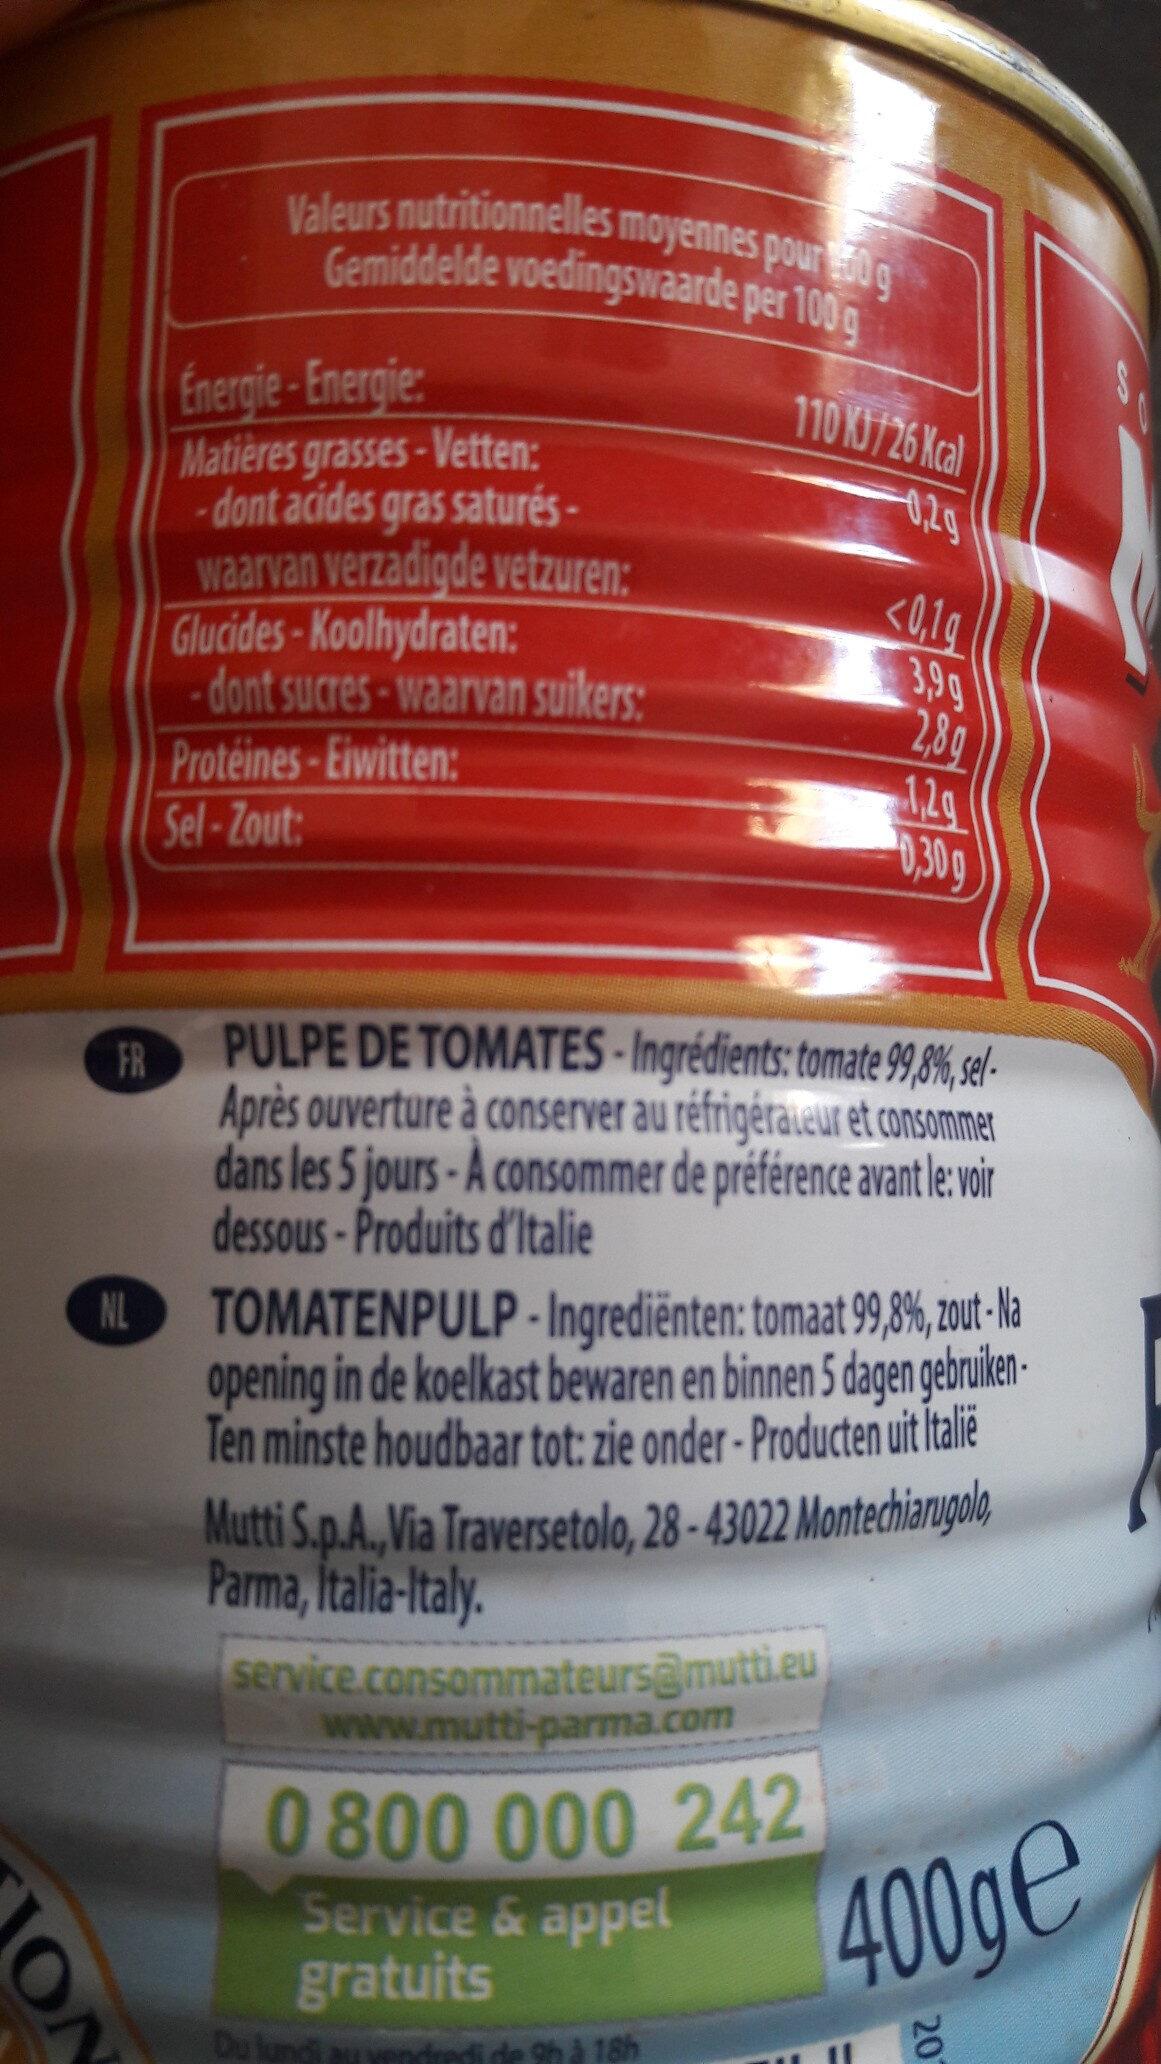 Polpa tomatenfruchtfleisch - Informació nutricional - fr